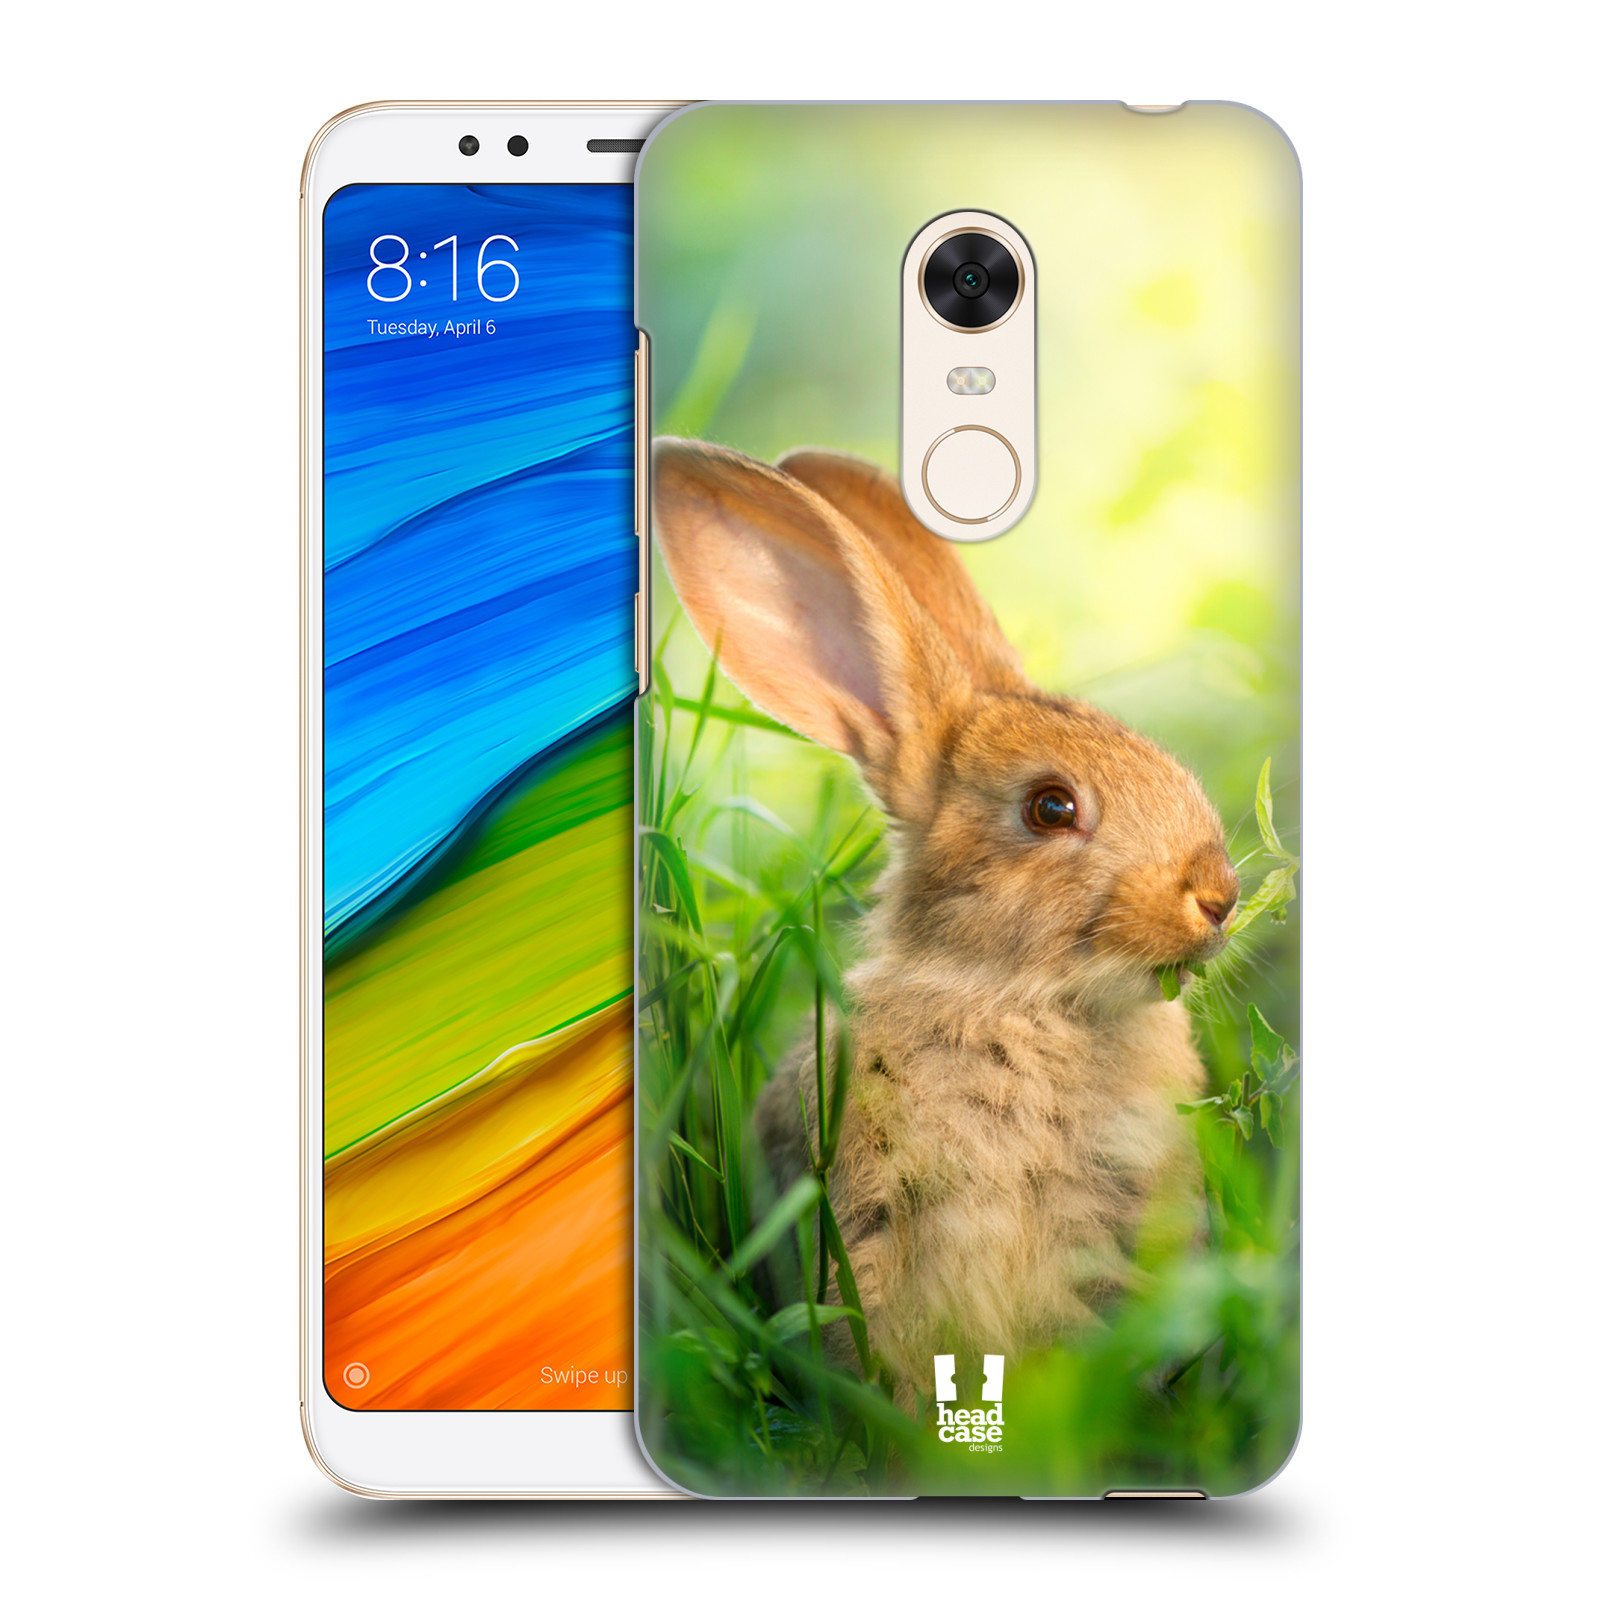 HEAD CASE plastový obal na mobil Xiaomi Redmi 5 PLUS vzor Divočina, Divoký život a zvířata foto ZAJÍČEK V TRÁVĚ ZELENÁ